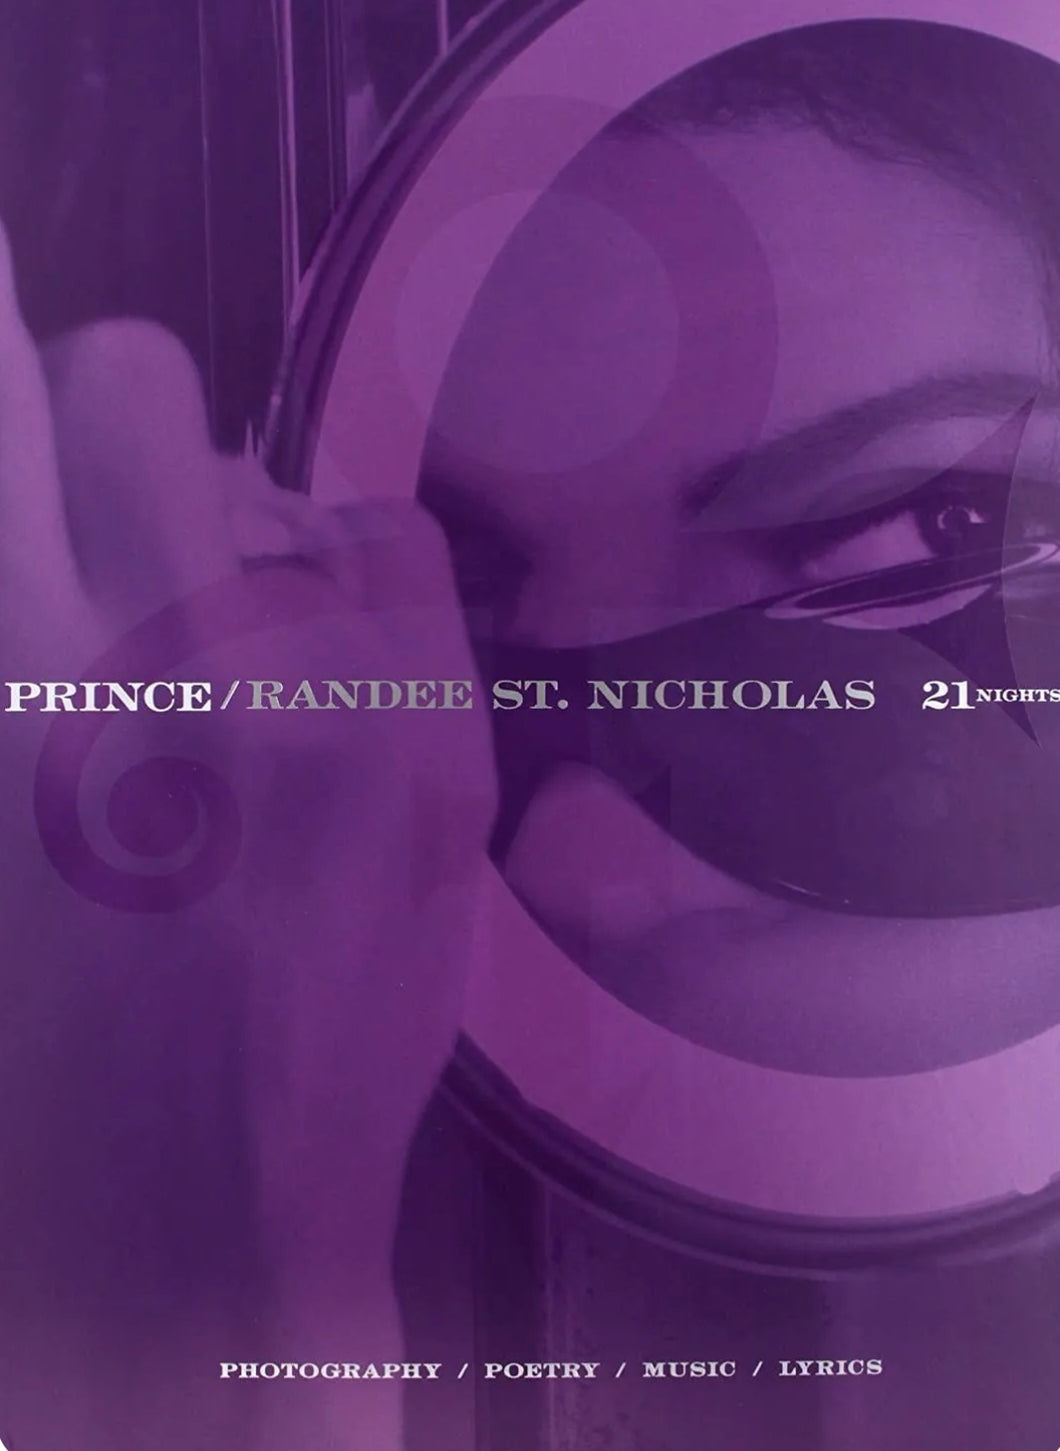 PRINCE - 21 NIGHTS (PHOTOGRAPHY POETRY MUSIC LYRICS) BOX